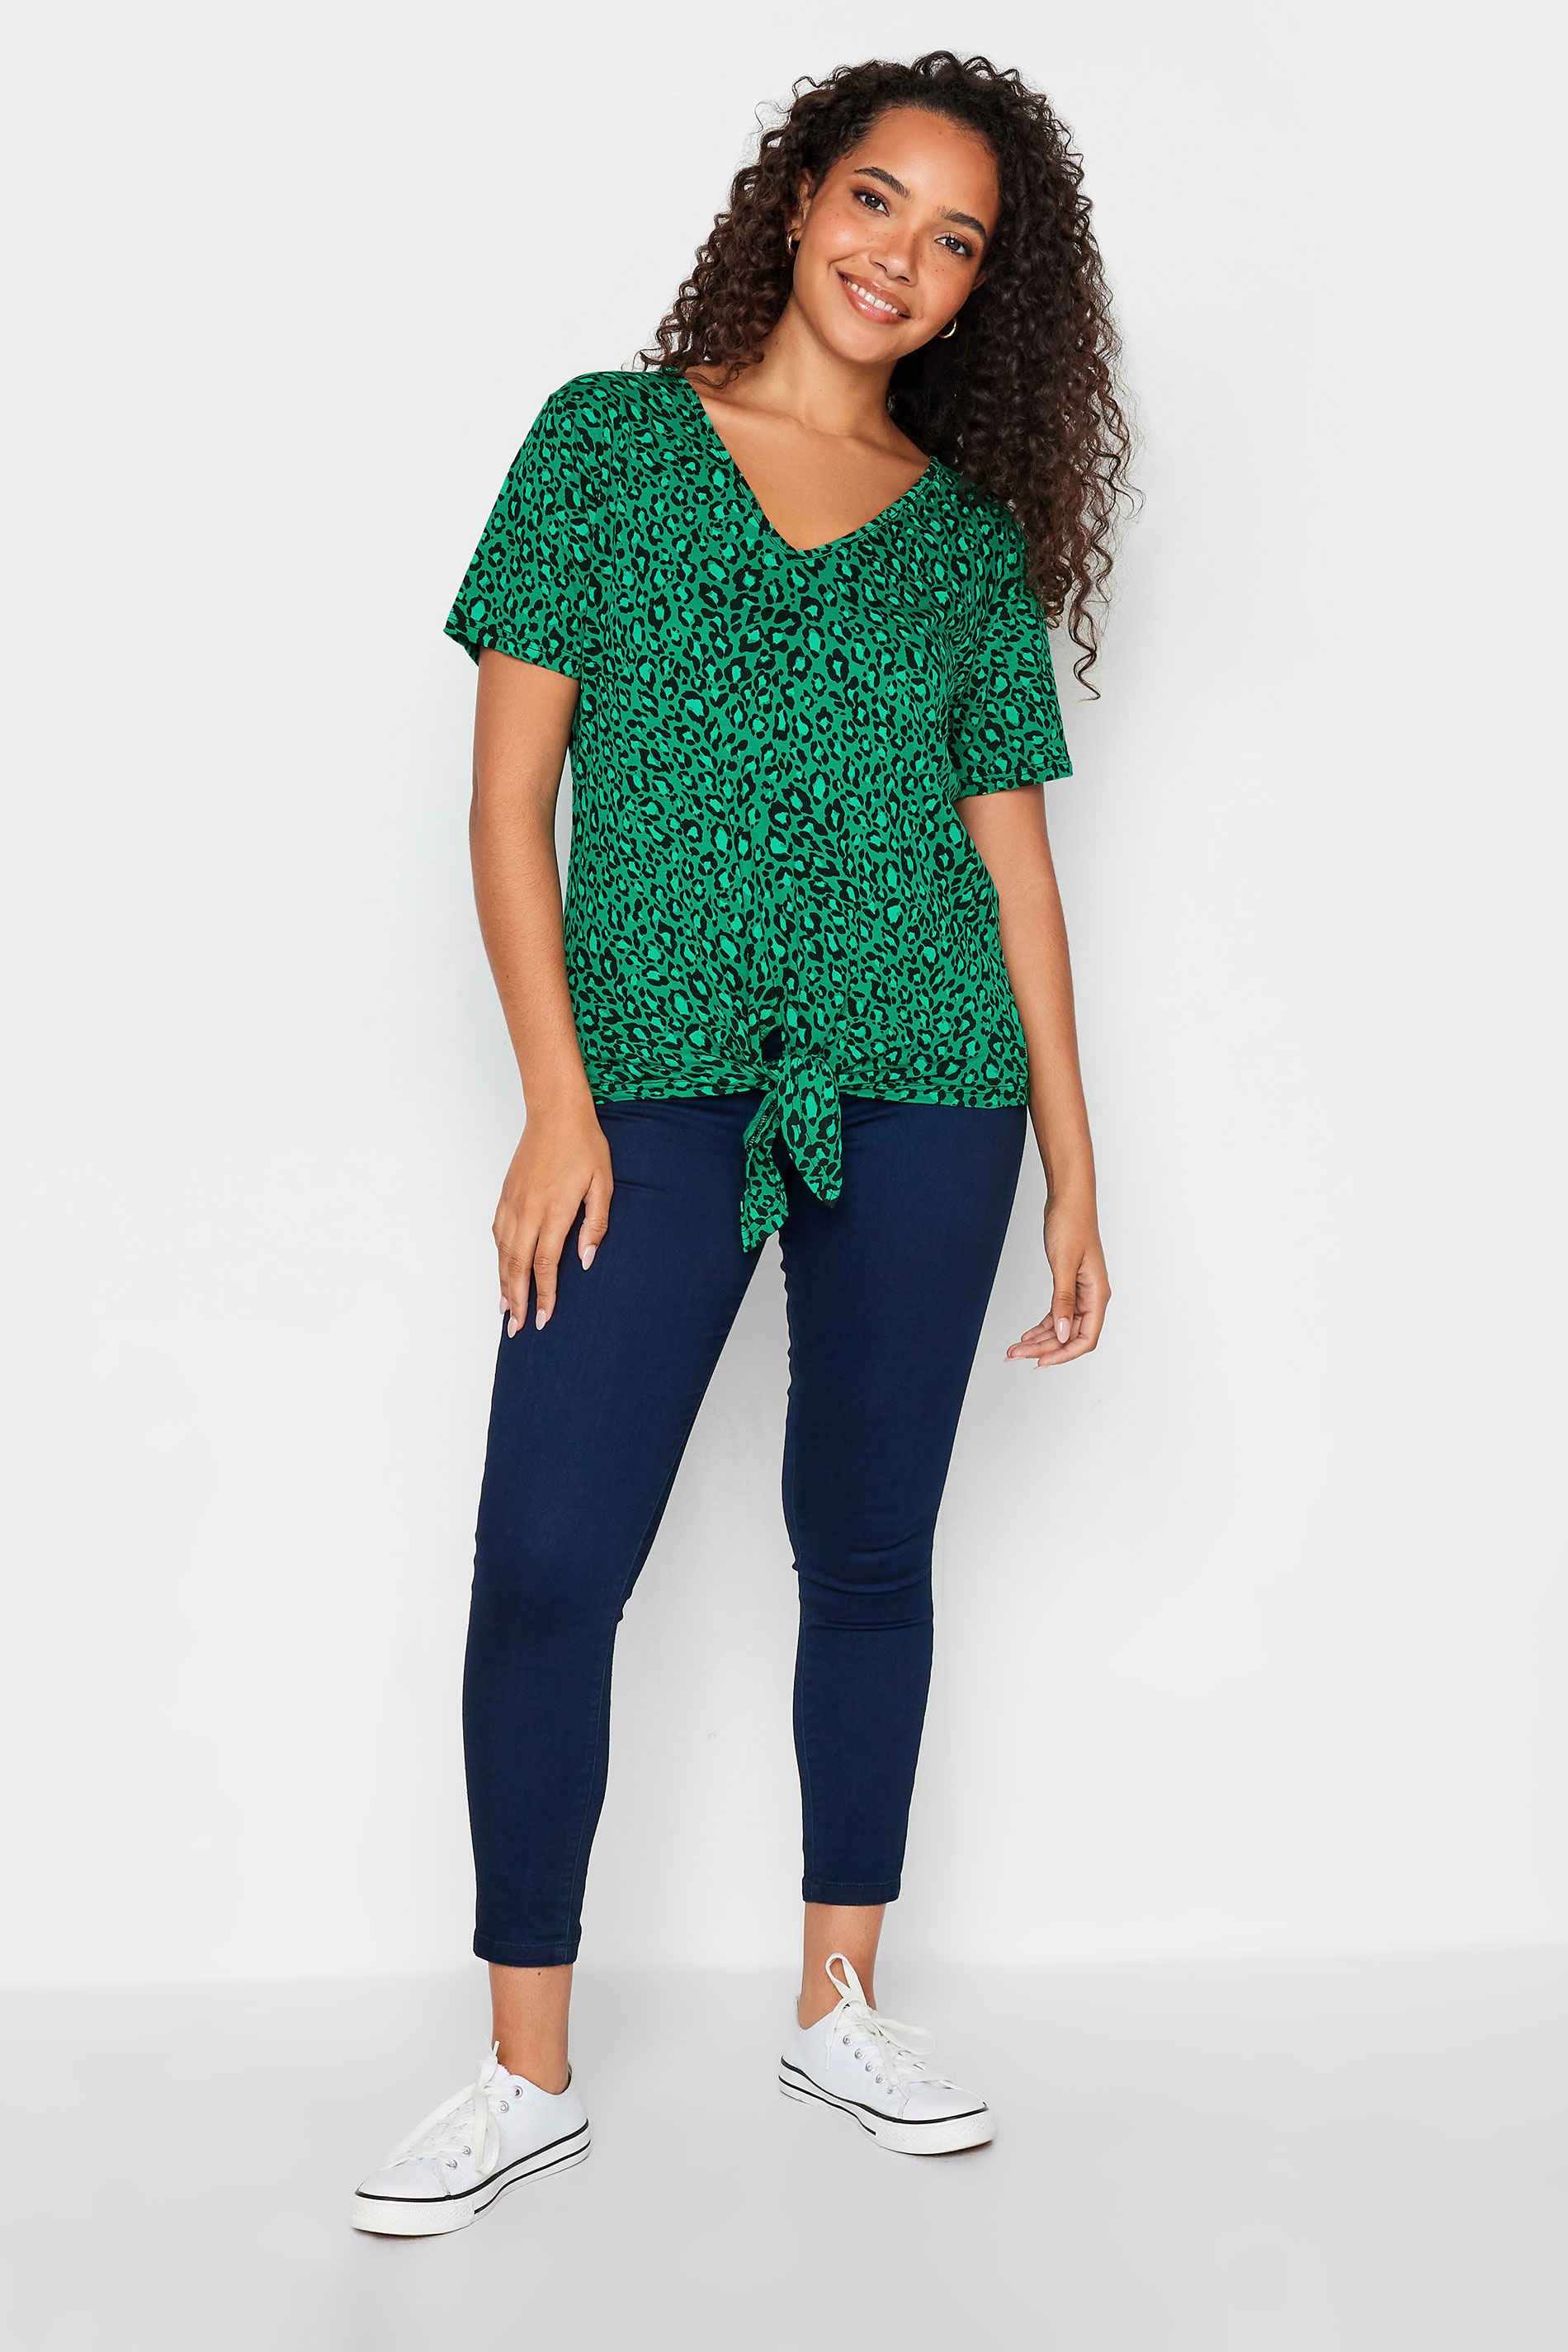 M&Co Green Leopard Print Tie Detail T-Shirt | M&Co  2